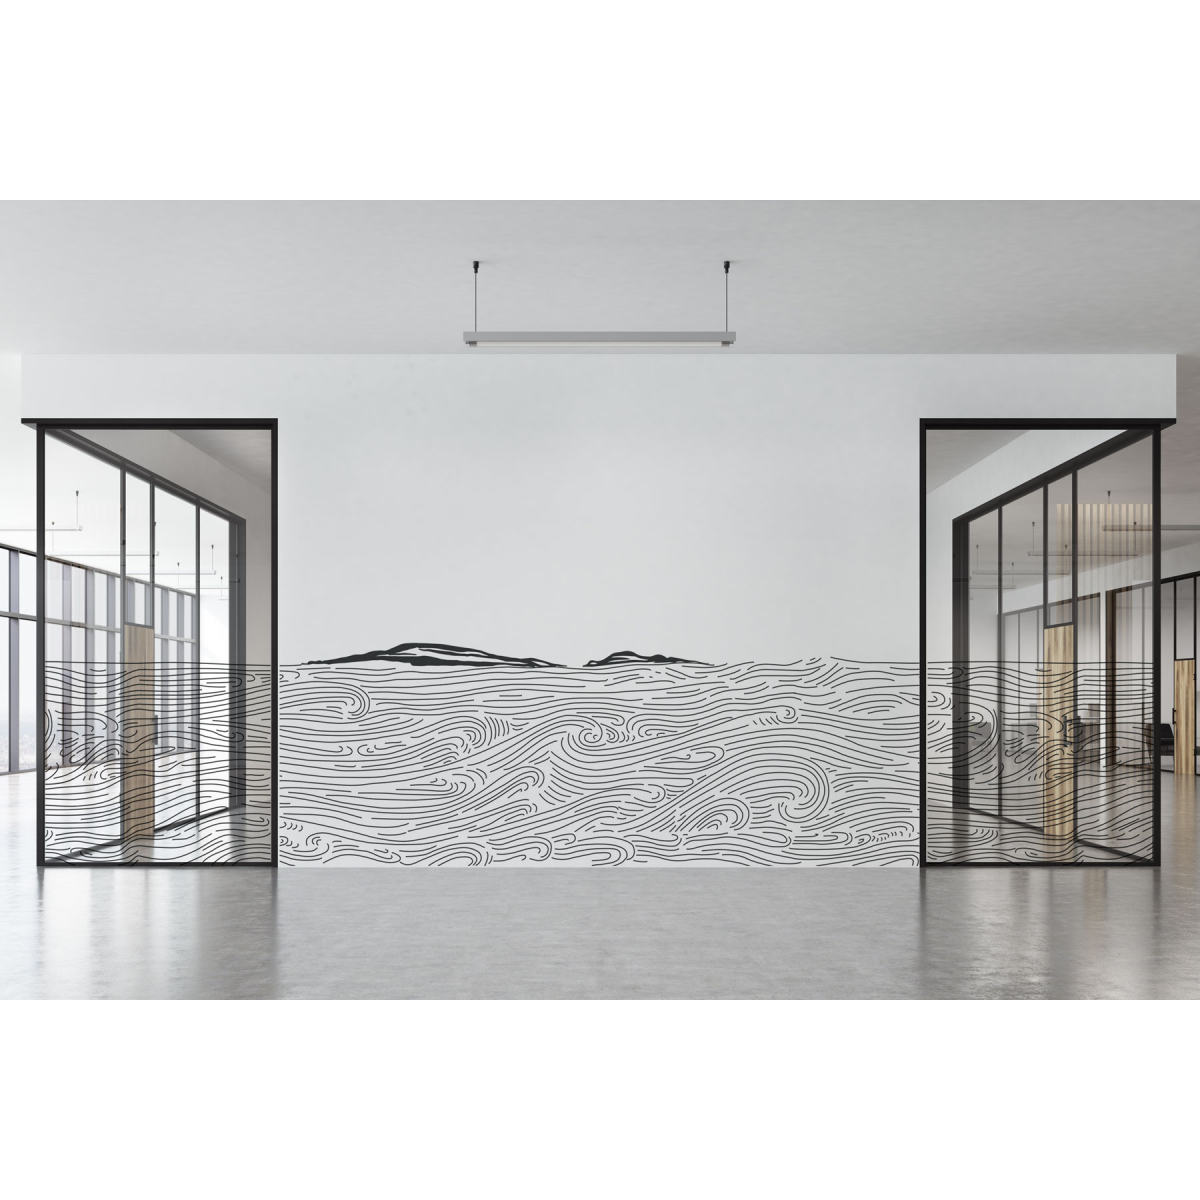 Panoramic wallpaper Creeks - Collection Elisabeth Pese - Acte-Deco